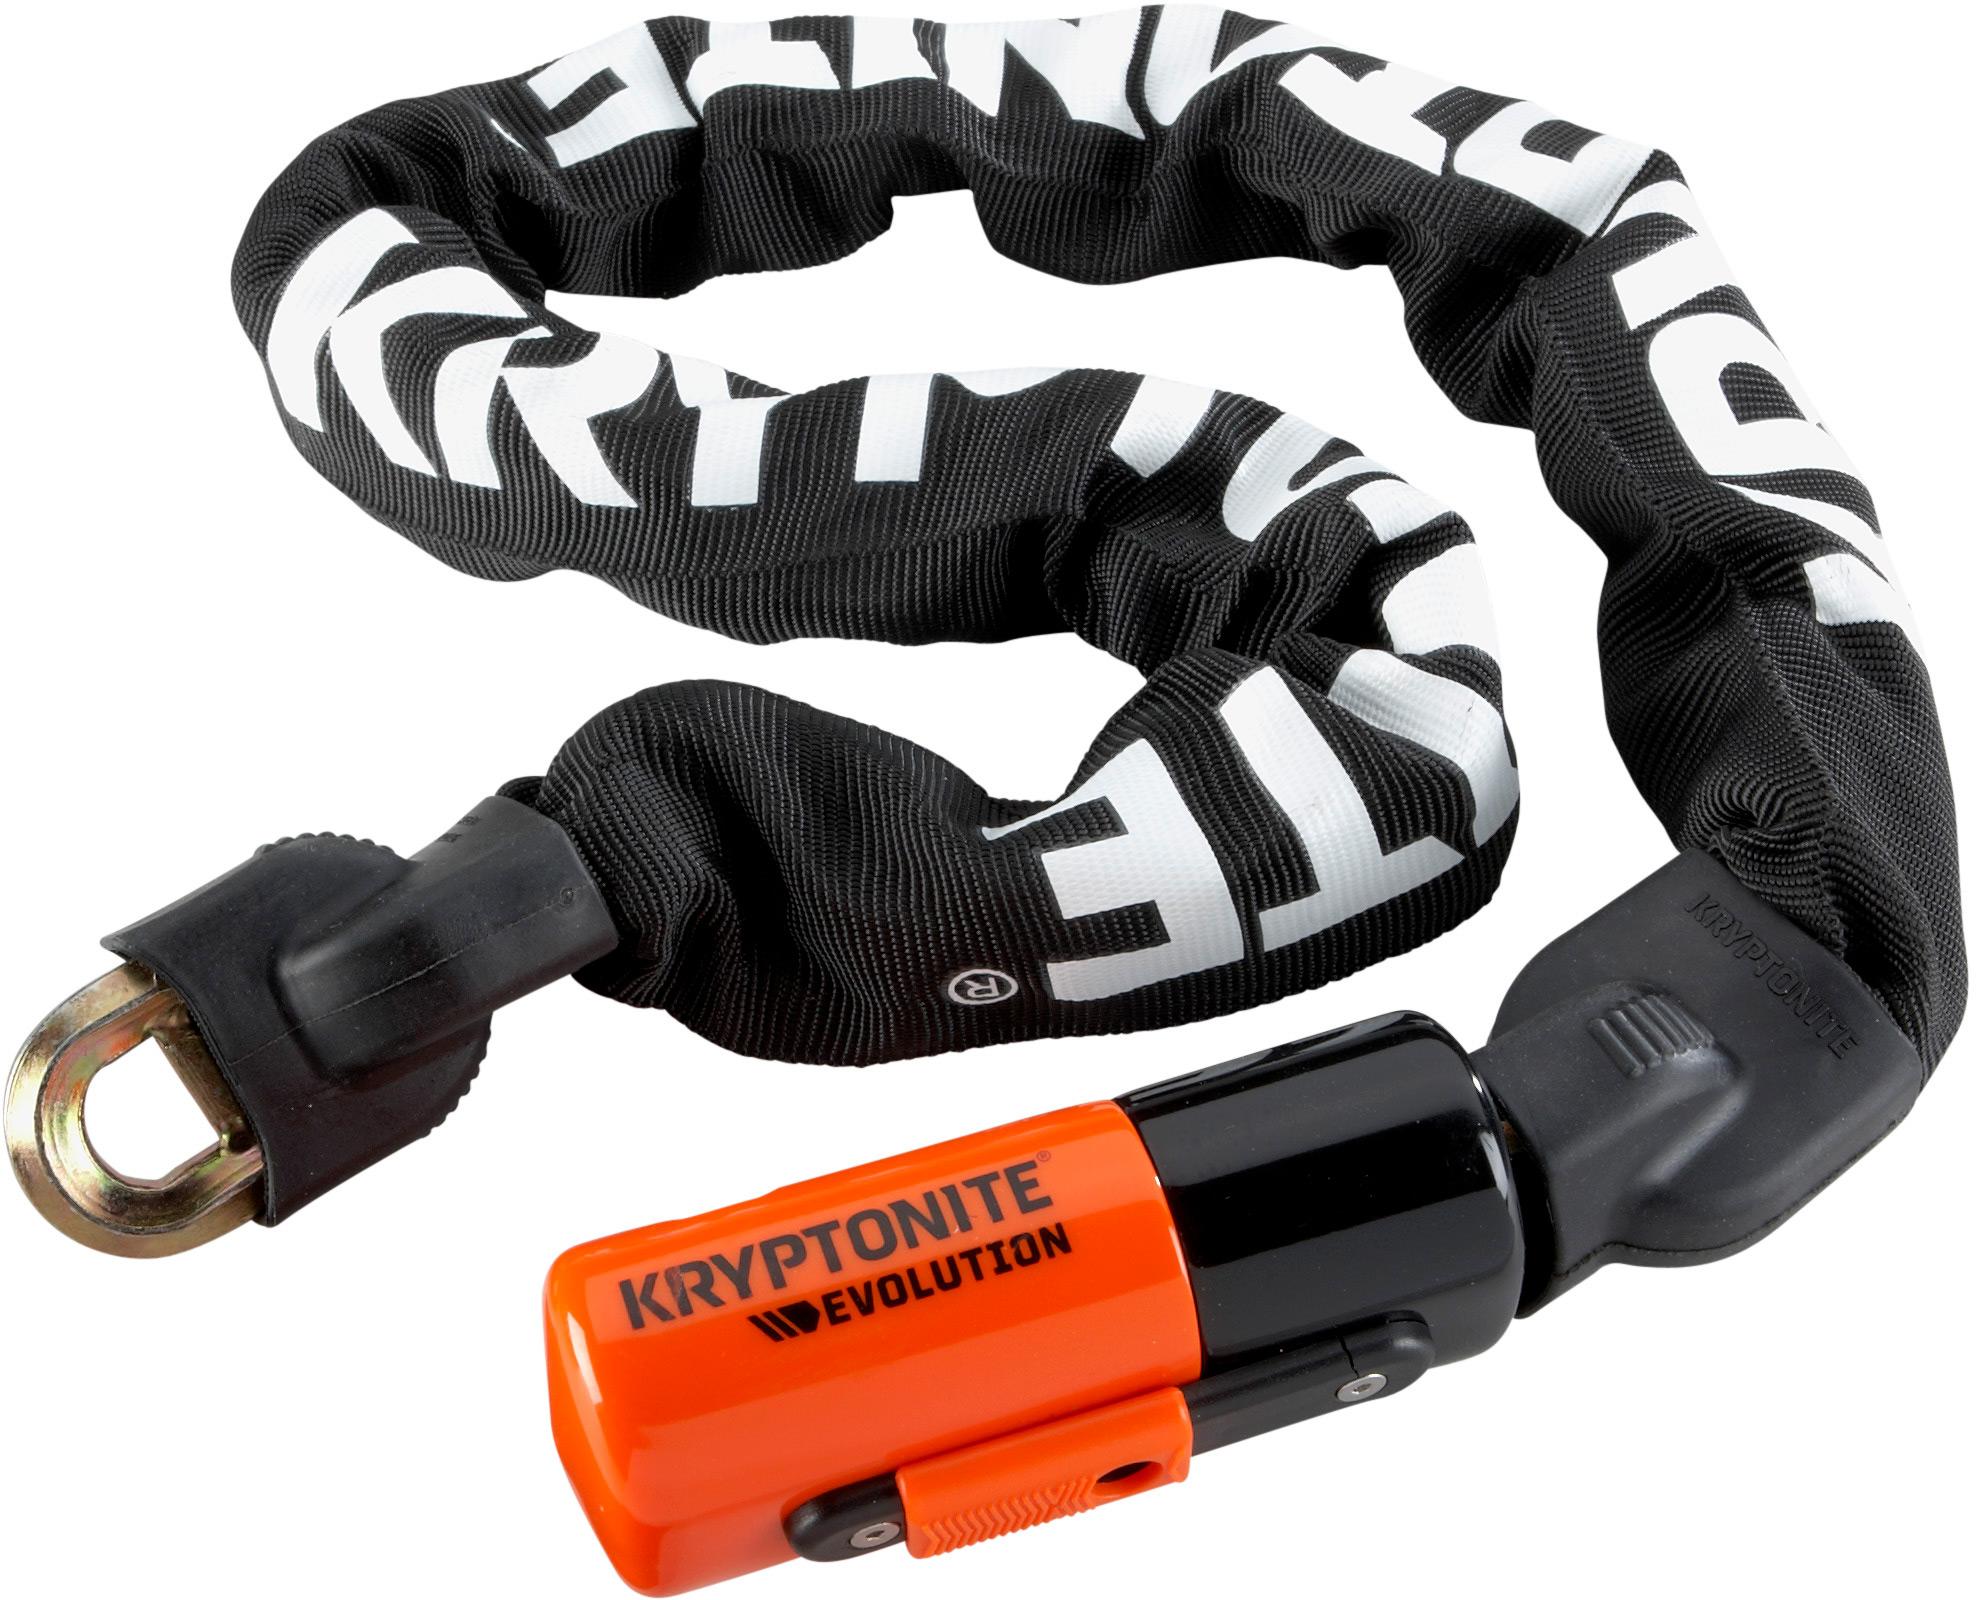 Kryptonite Evolution Series 4 1090 Integrated Chain Lock - Black/orange